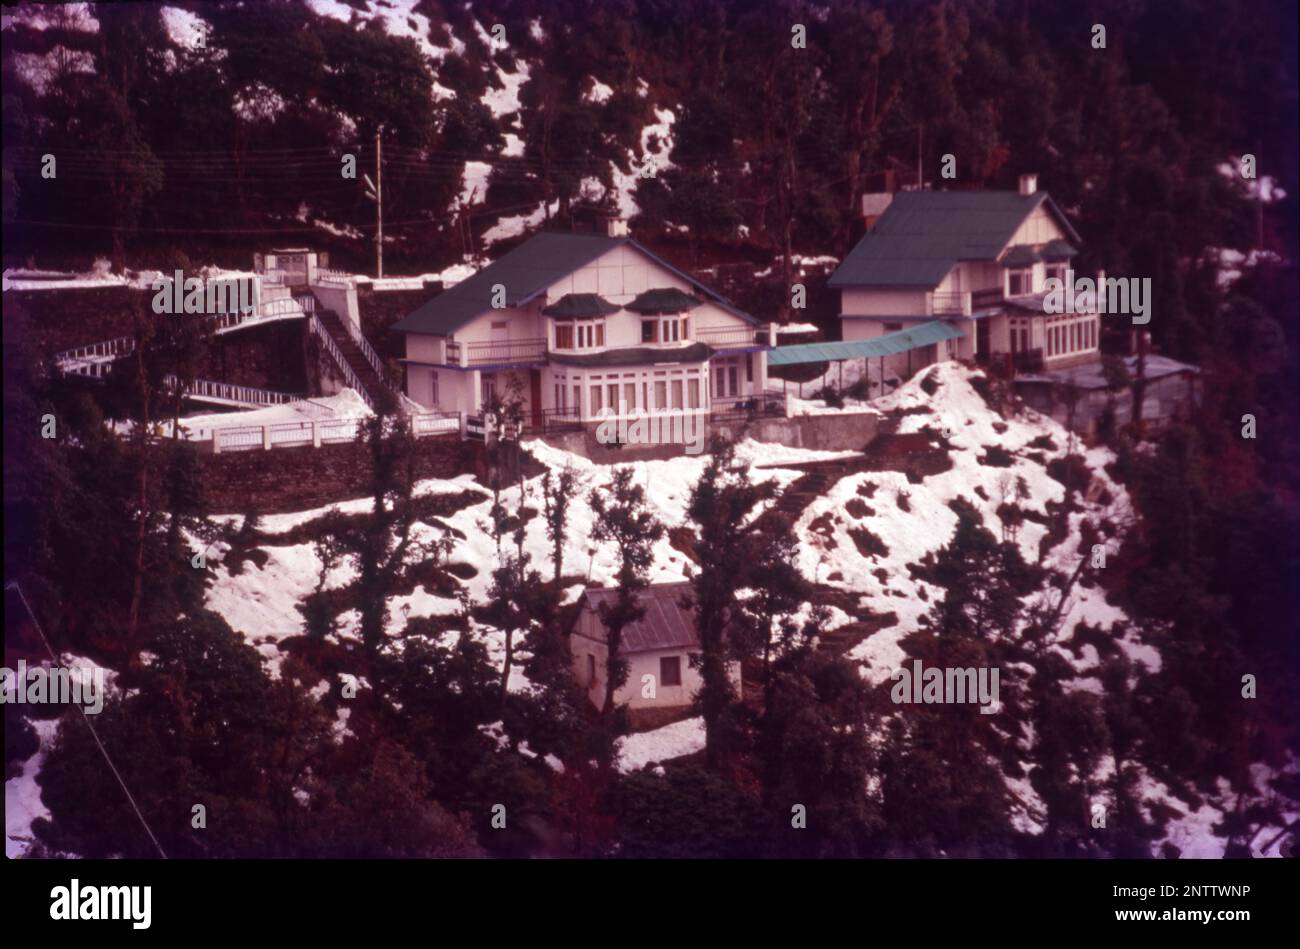 Houses Surrounded by Snow, Dalhousie, Himachal Pradesh, India Stock Photo